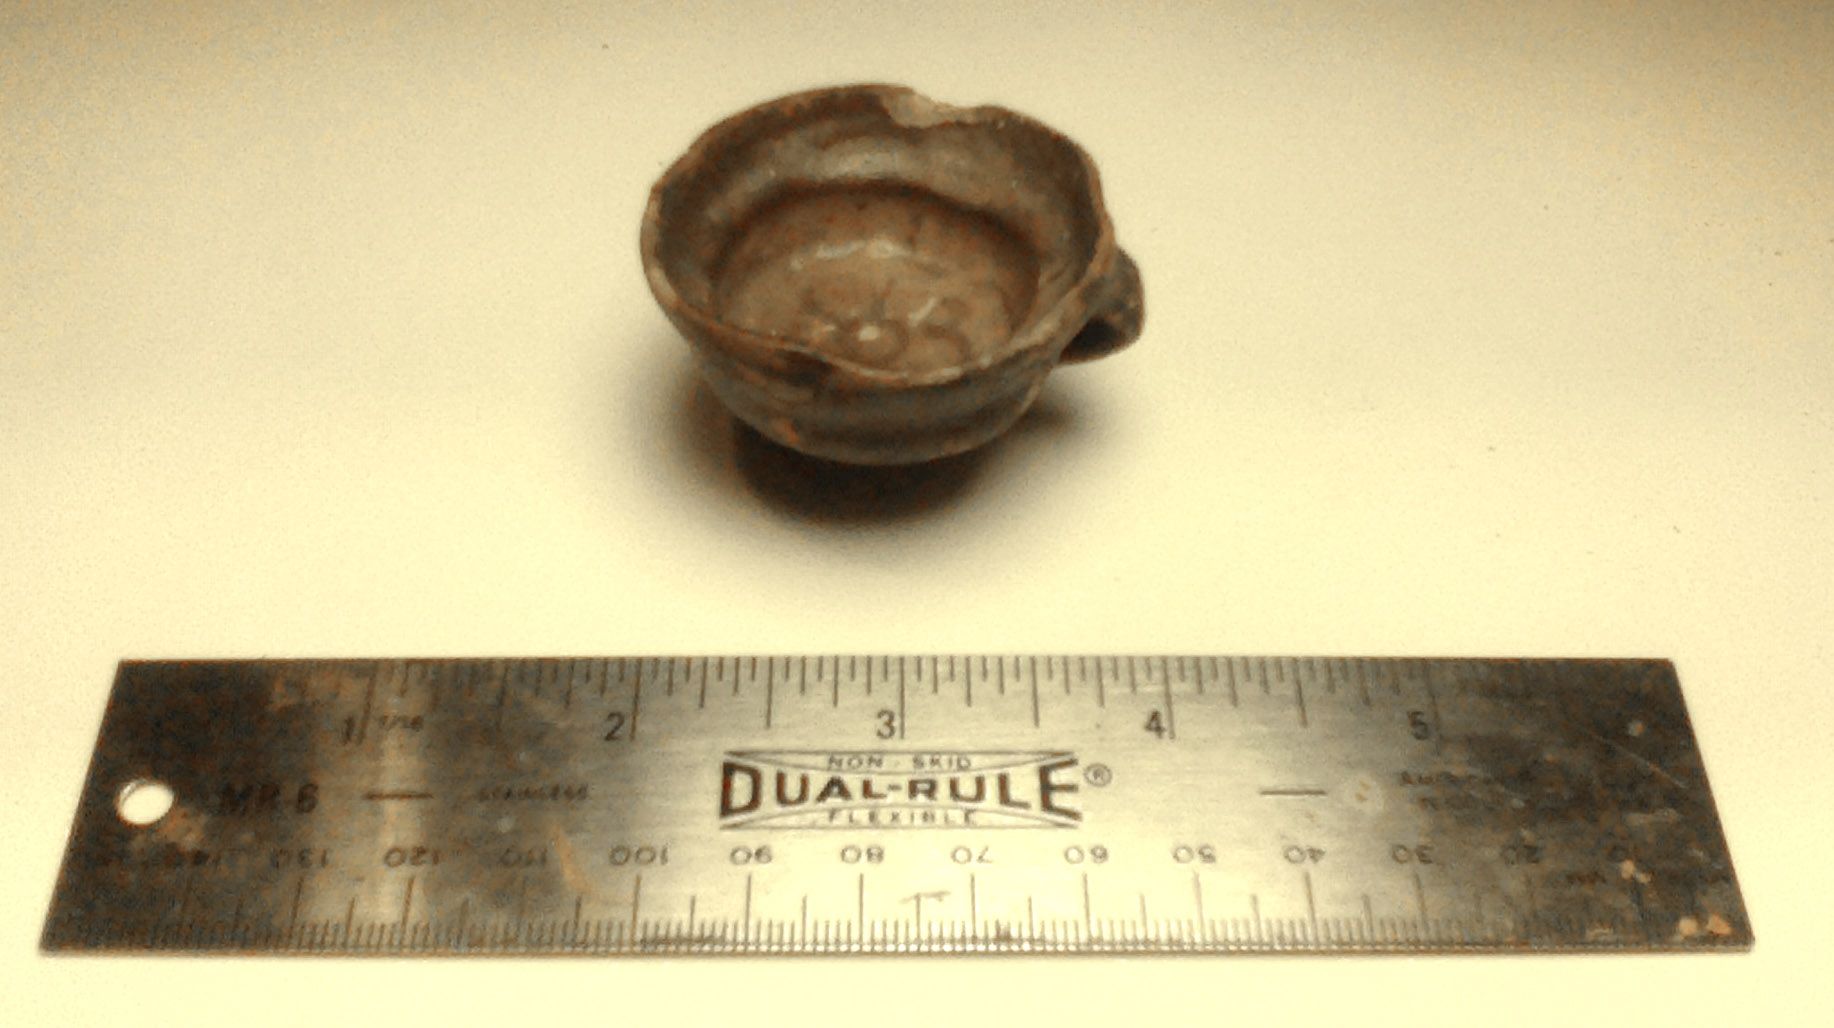 clay cup source: The Capitana